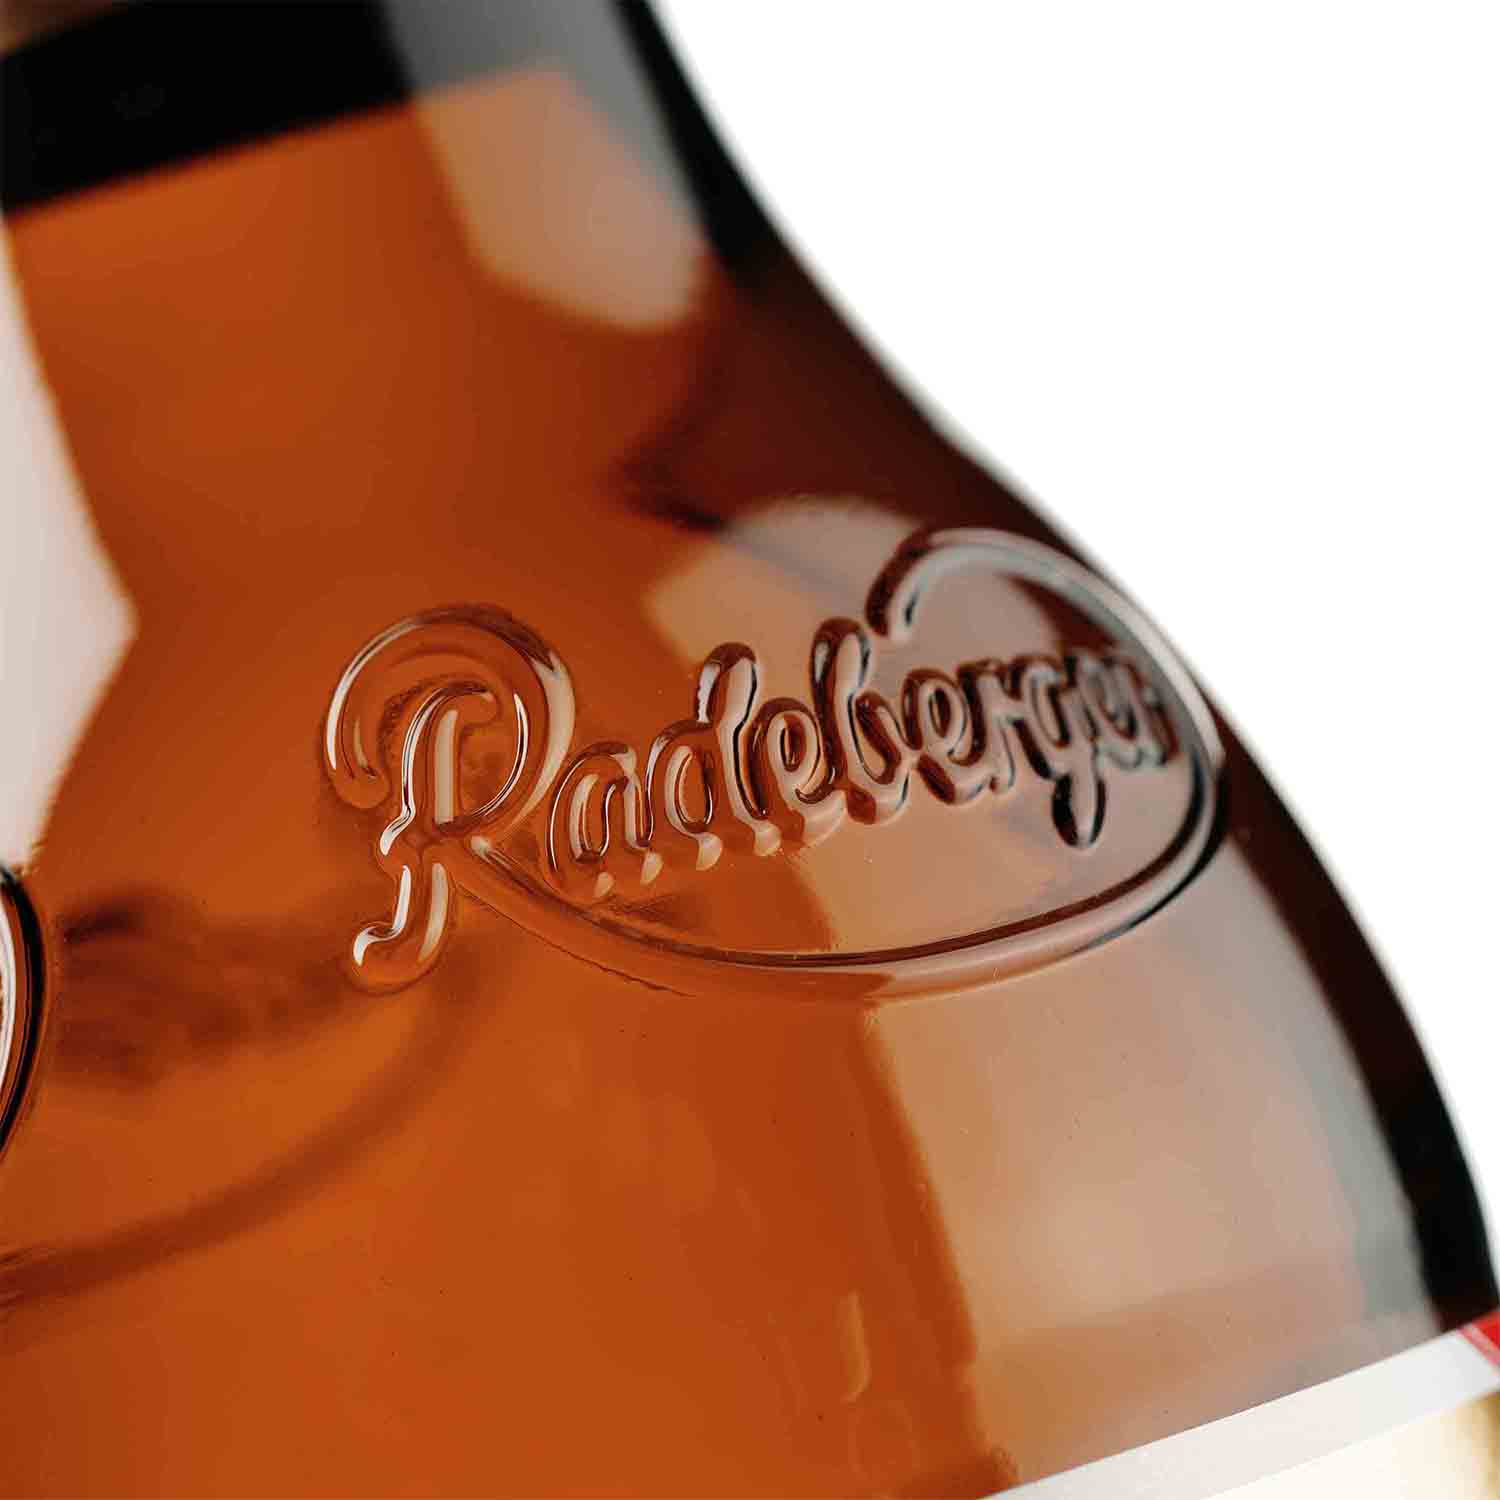 Пиво Radeberger Pilsner світле, 4.8%, 0.5 л - фото 4